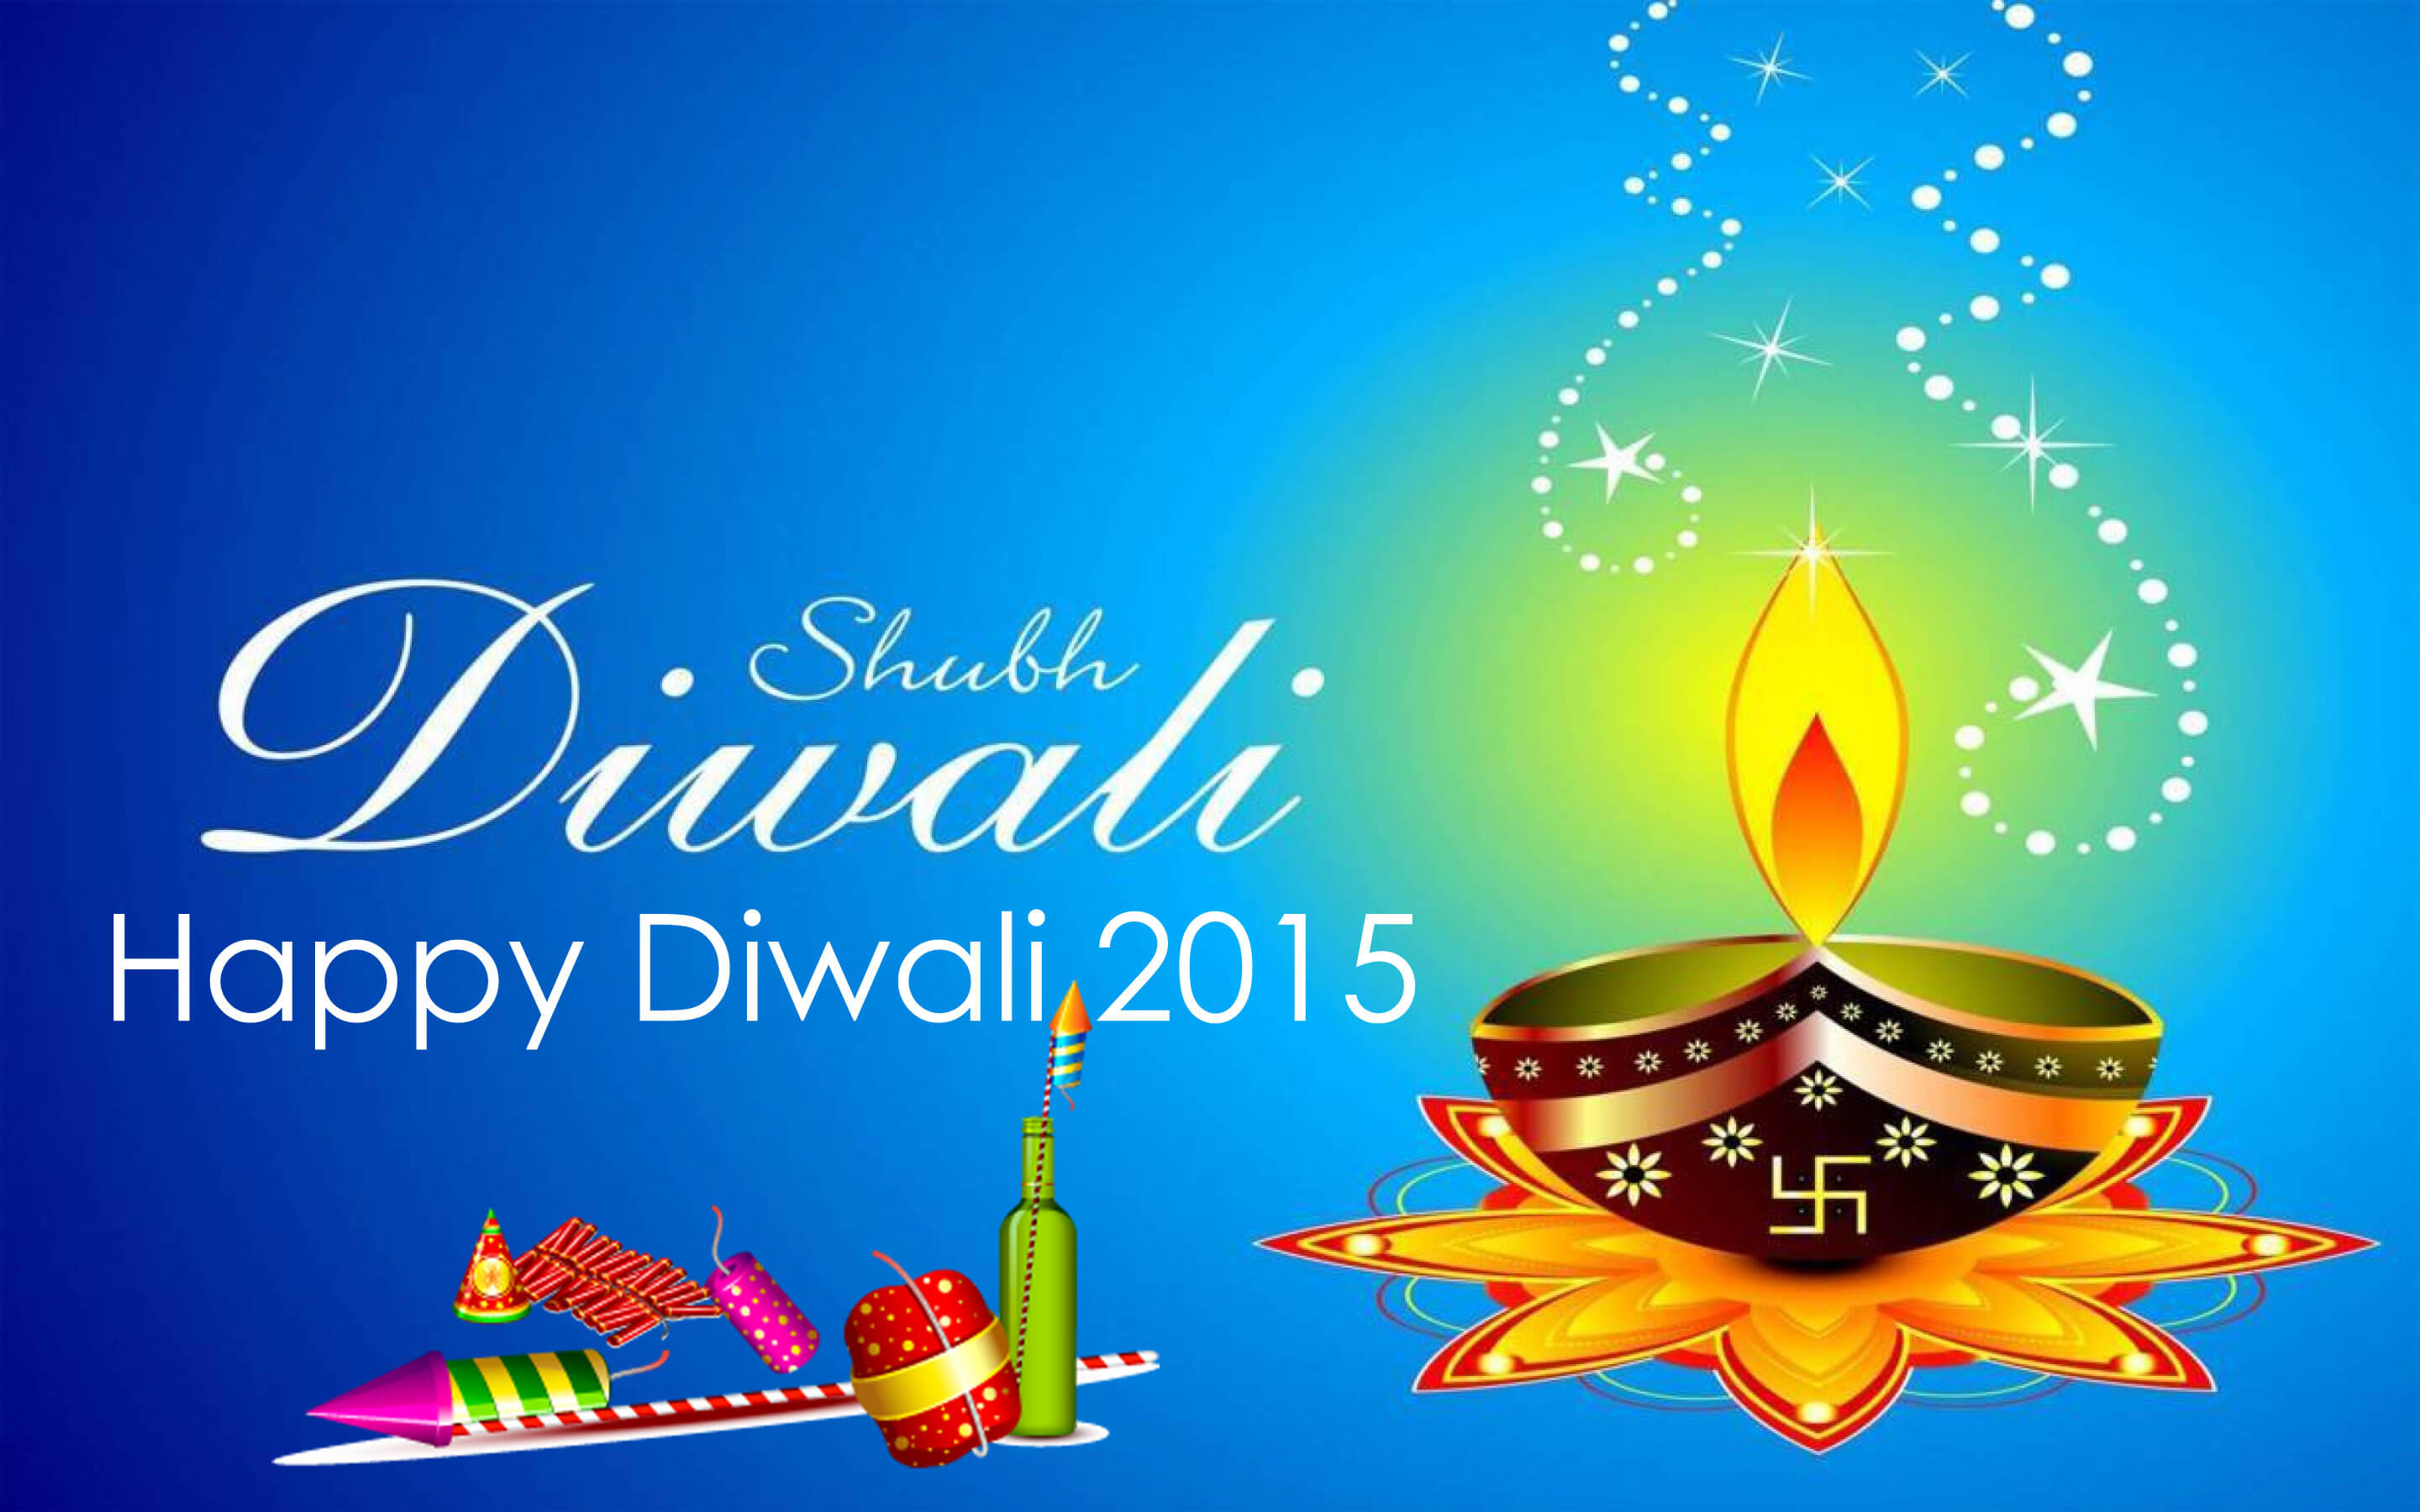 Download-Happy-Diwali-2015-HD-Wallpapers-facebook-mobile-desktop-cgfrog-5